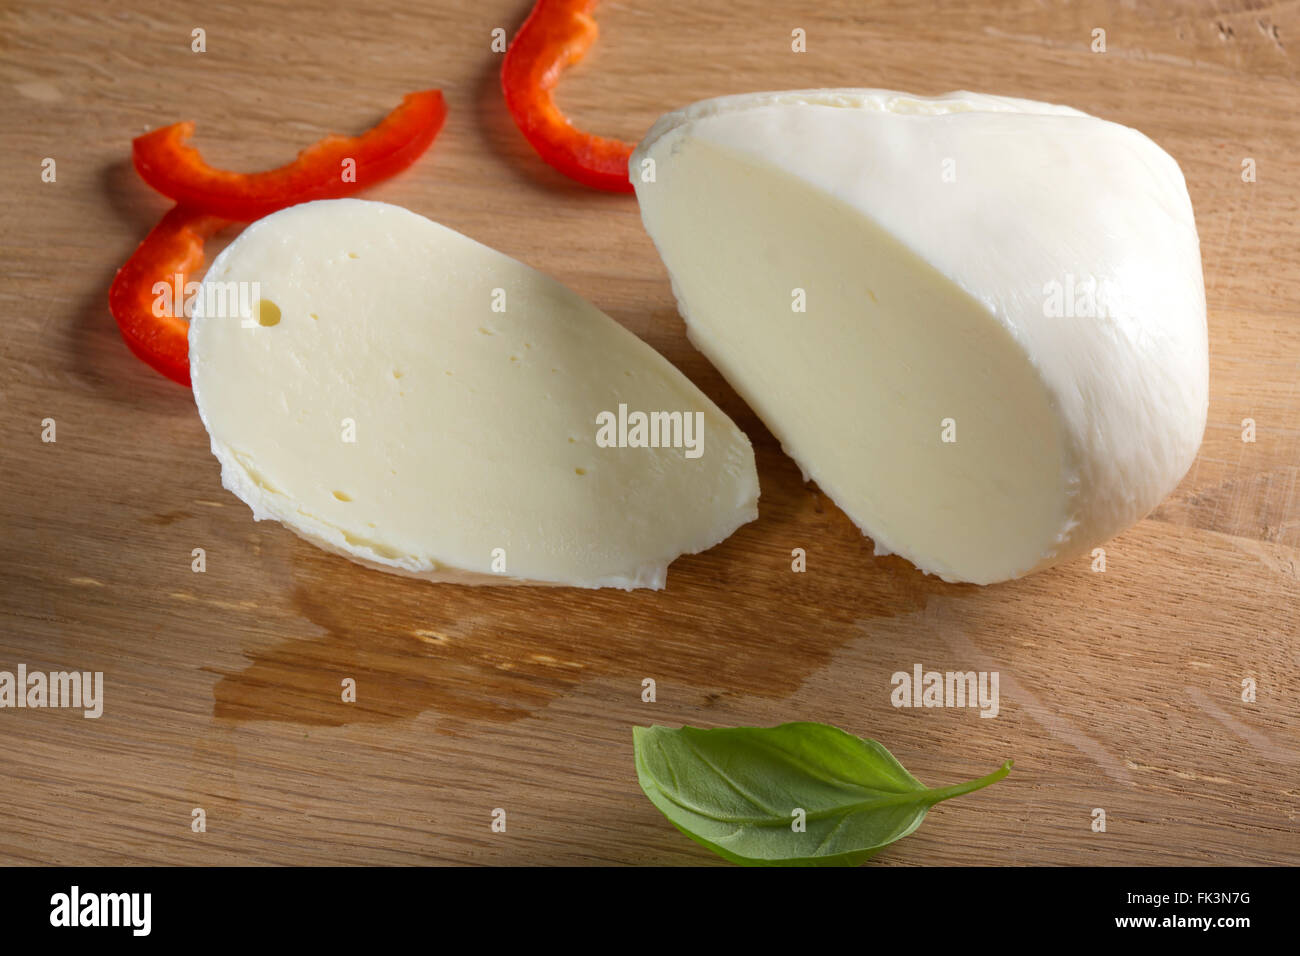 Buffalo mozzarella on wooden table with red pepper. Selective focus. Stock Photo